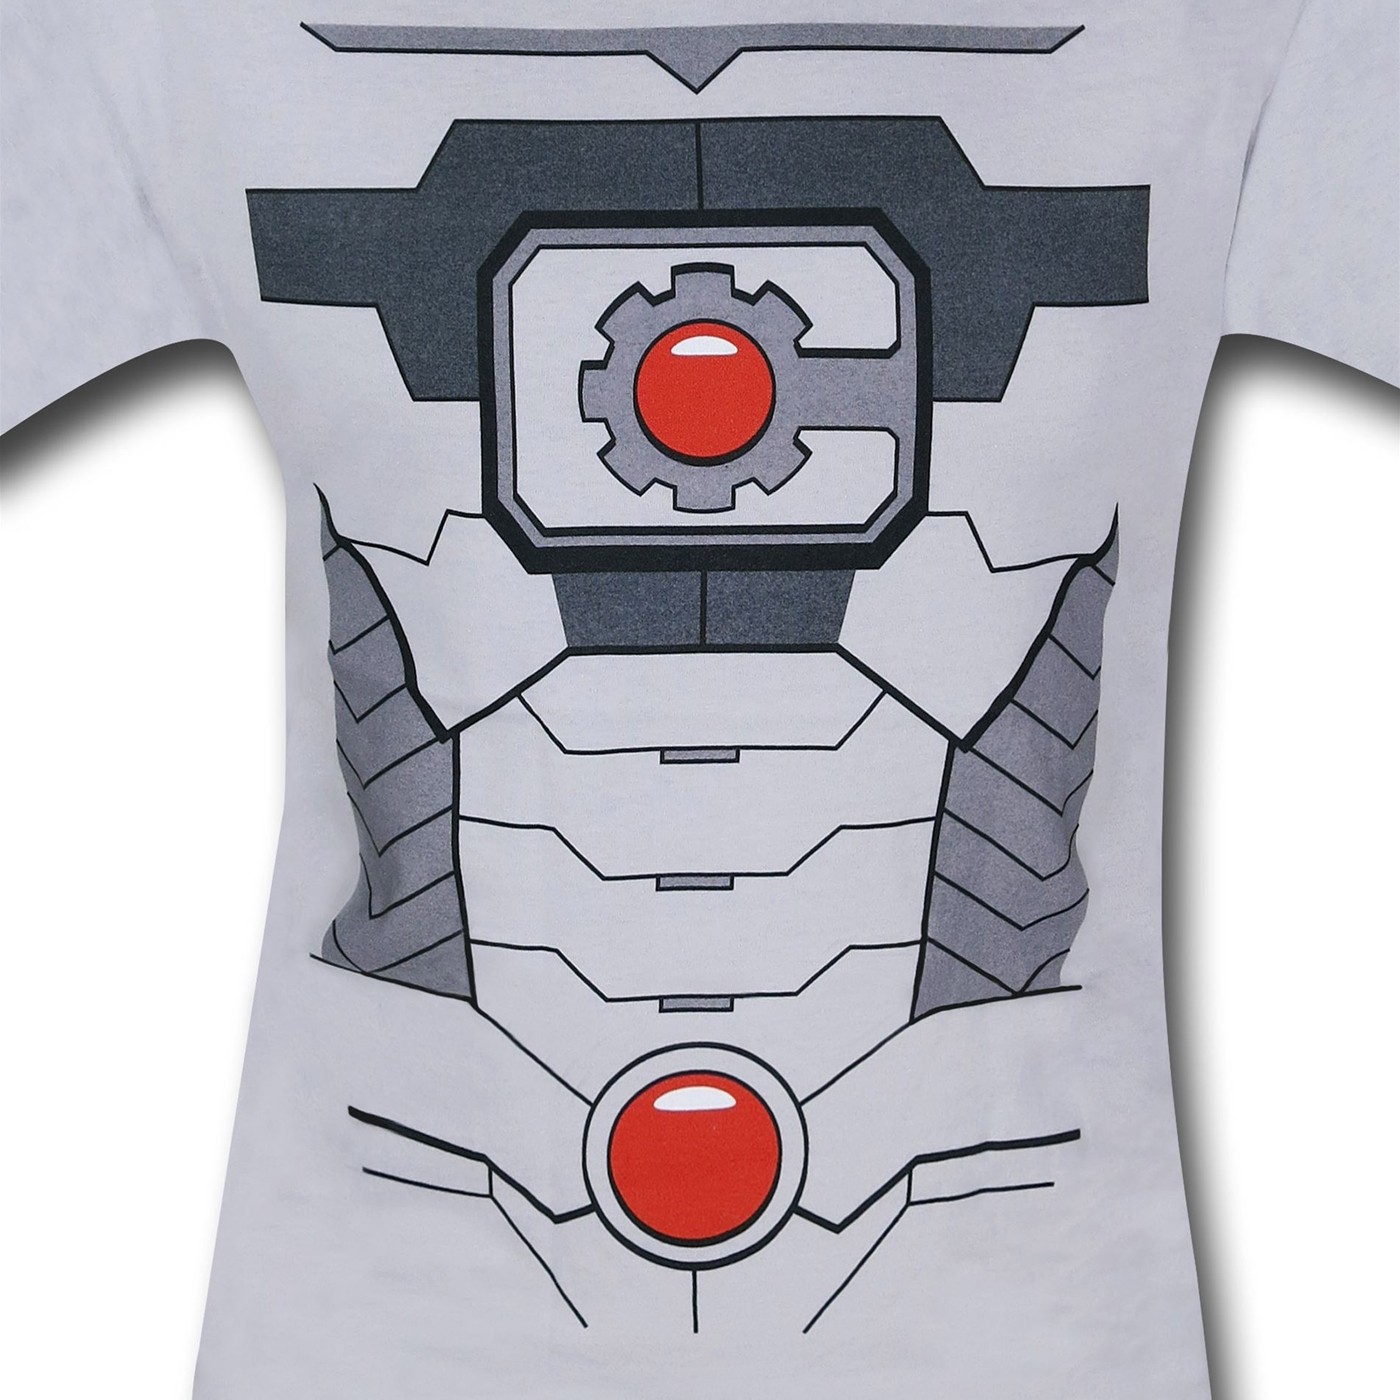 Cyborg Costume T-Shirt